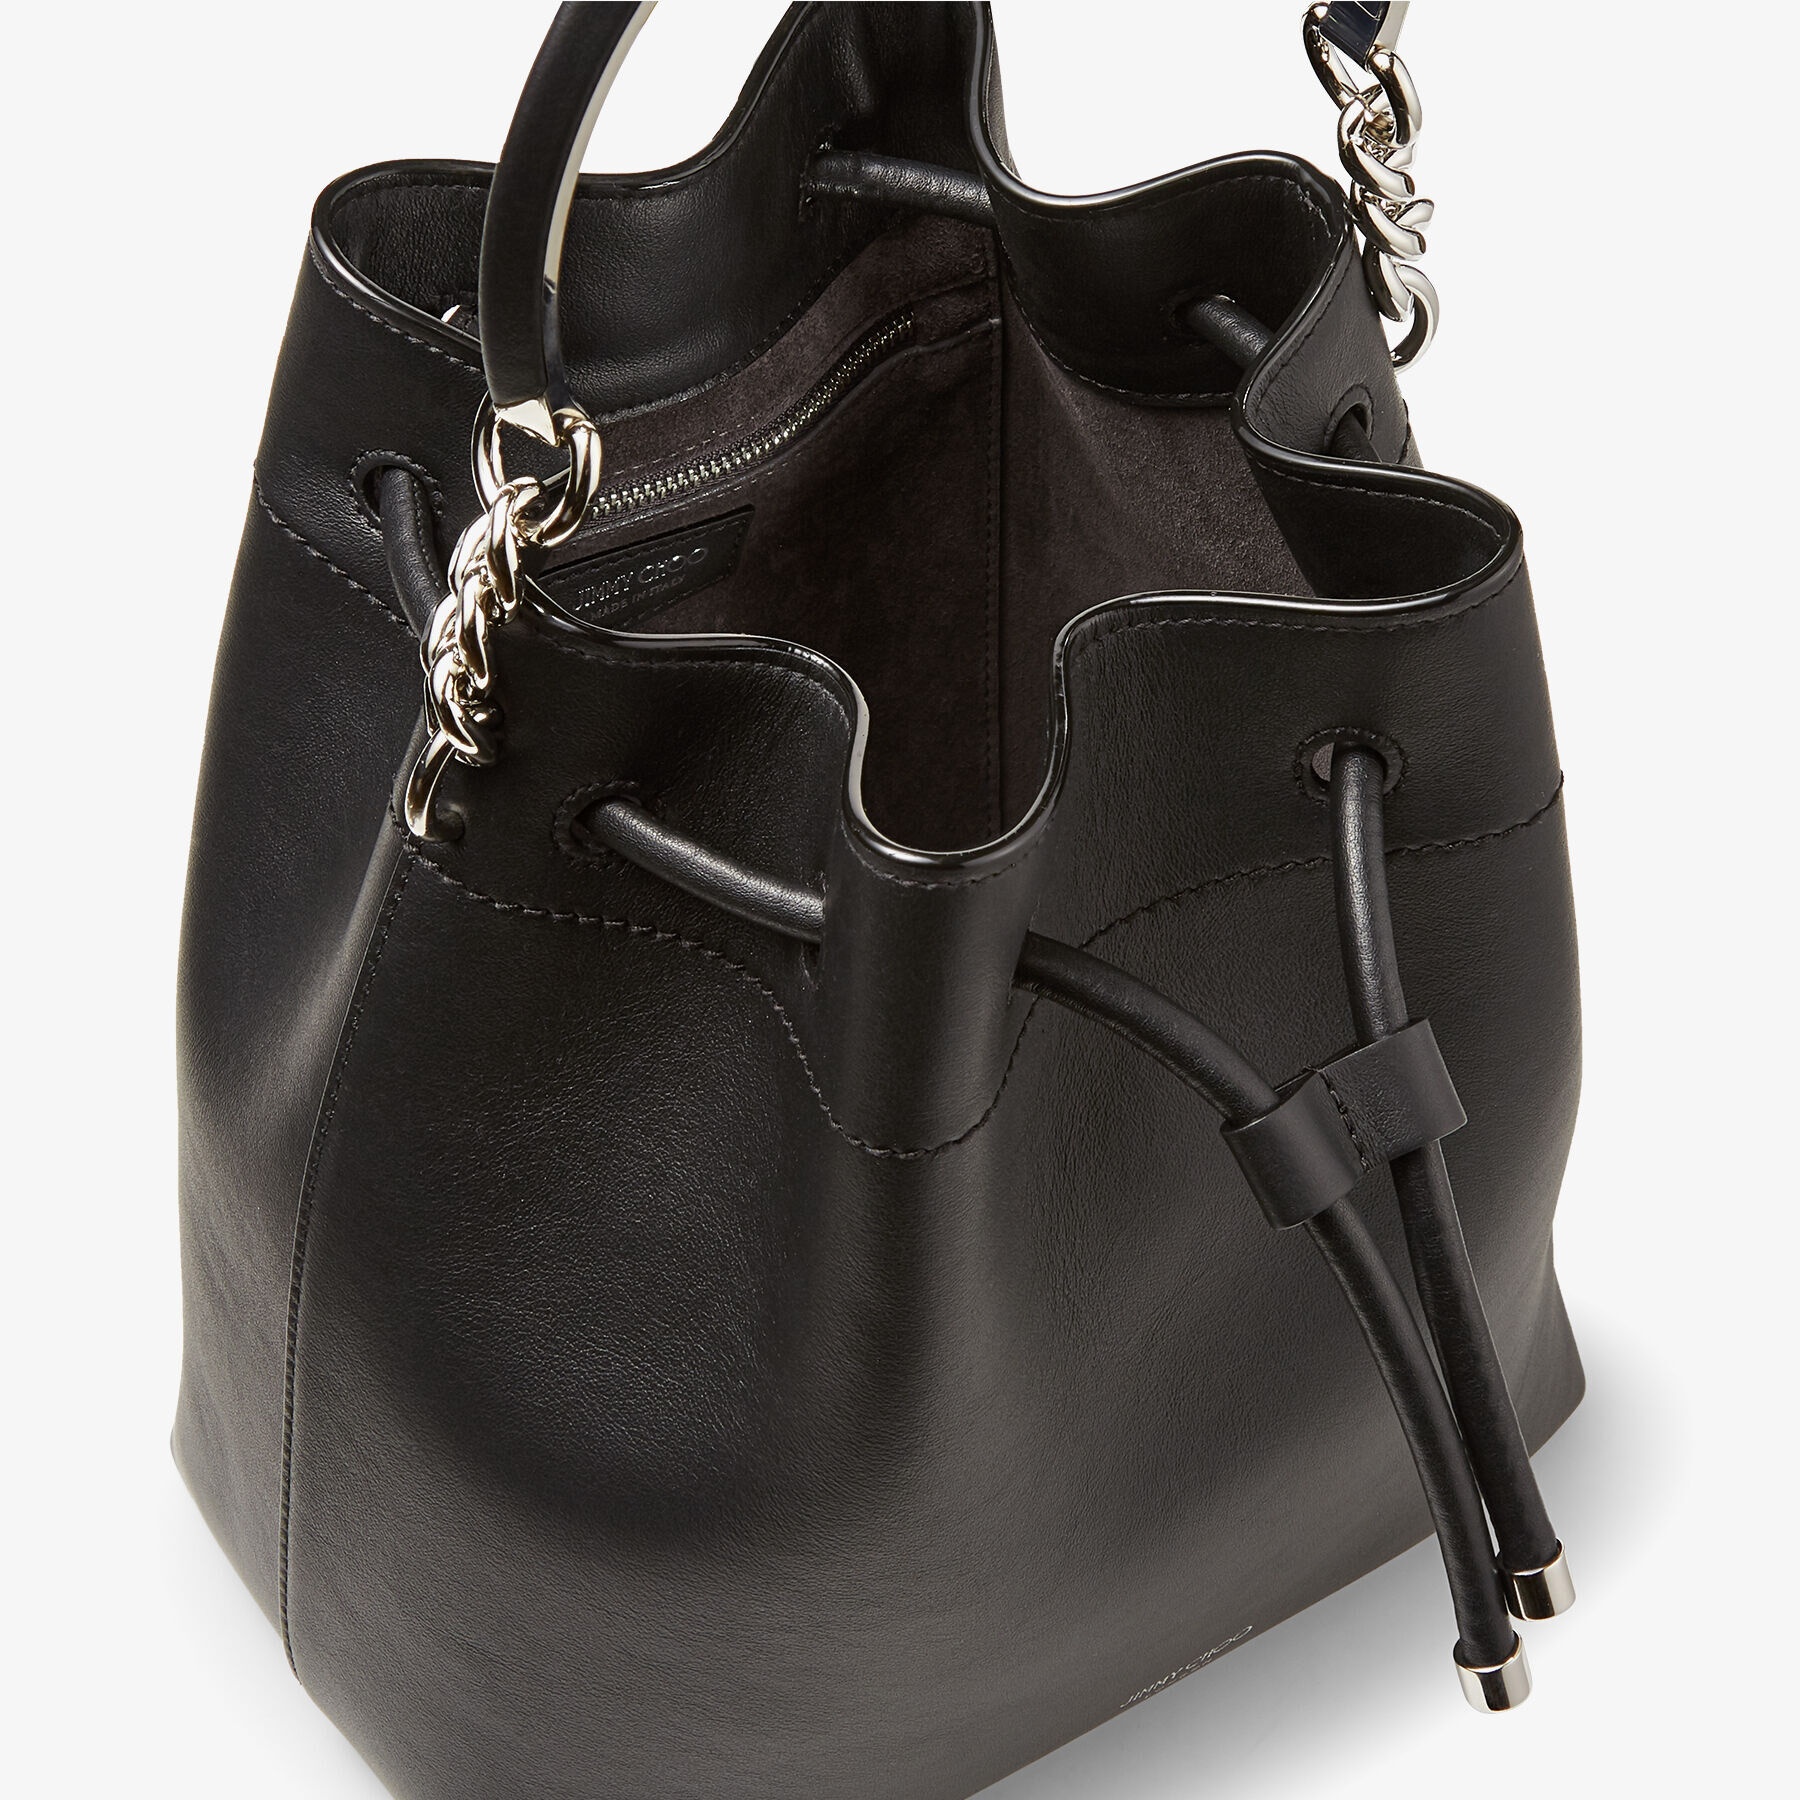 Bon Bon Bucket
Black Calf Leather Bag with Silver Metal Handle - 3